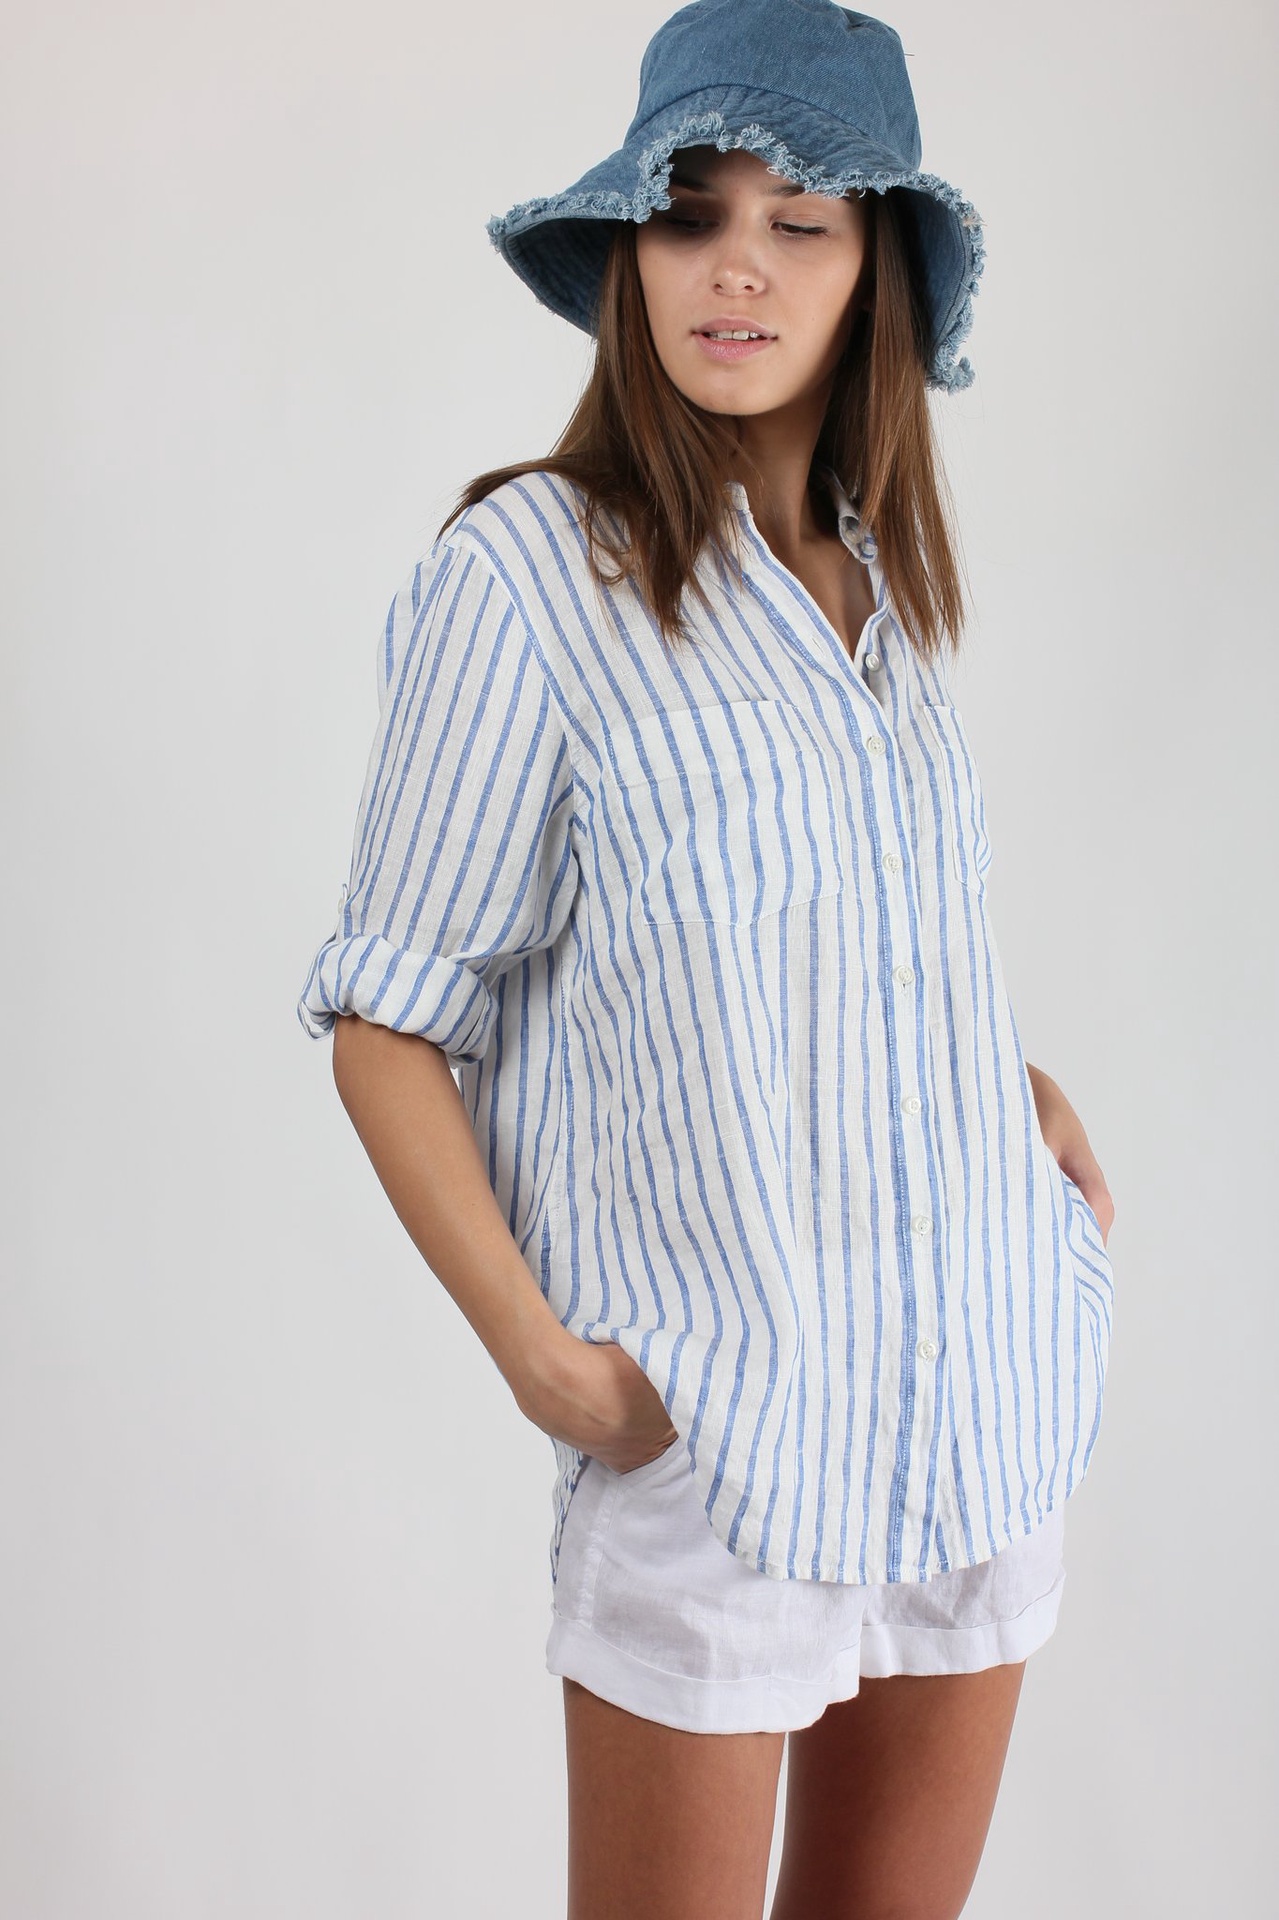 Hut Classic Boyfriend Linen Shirt White with Blue Stripe - THE HERD store